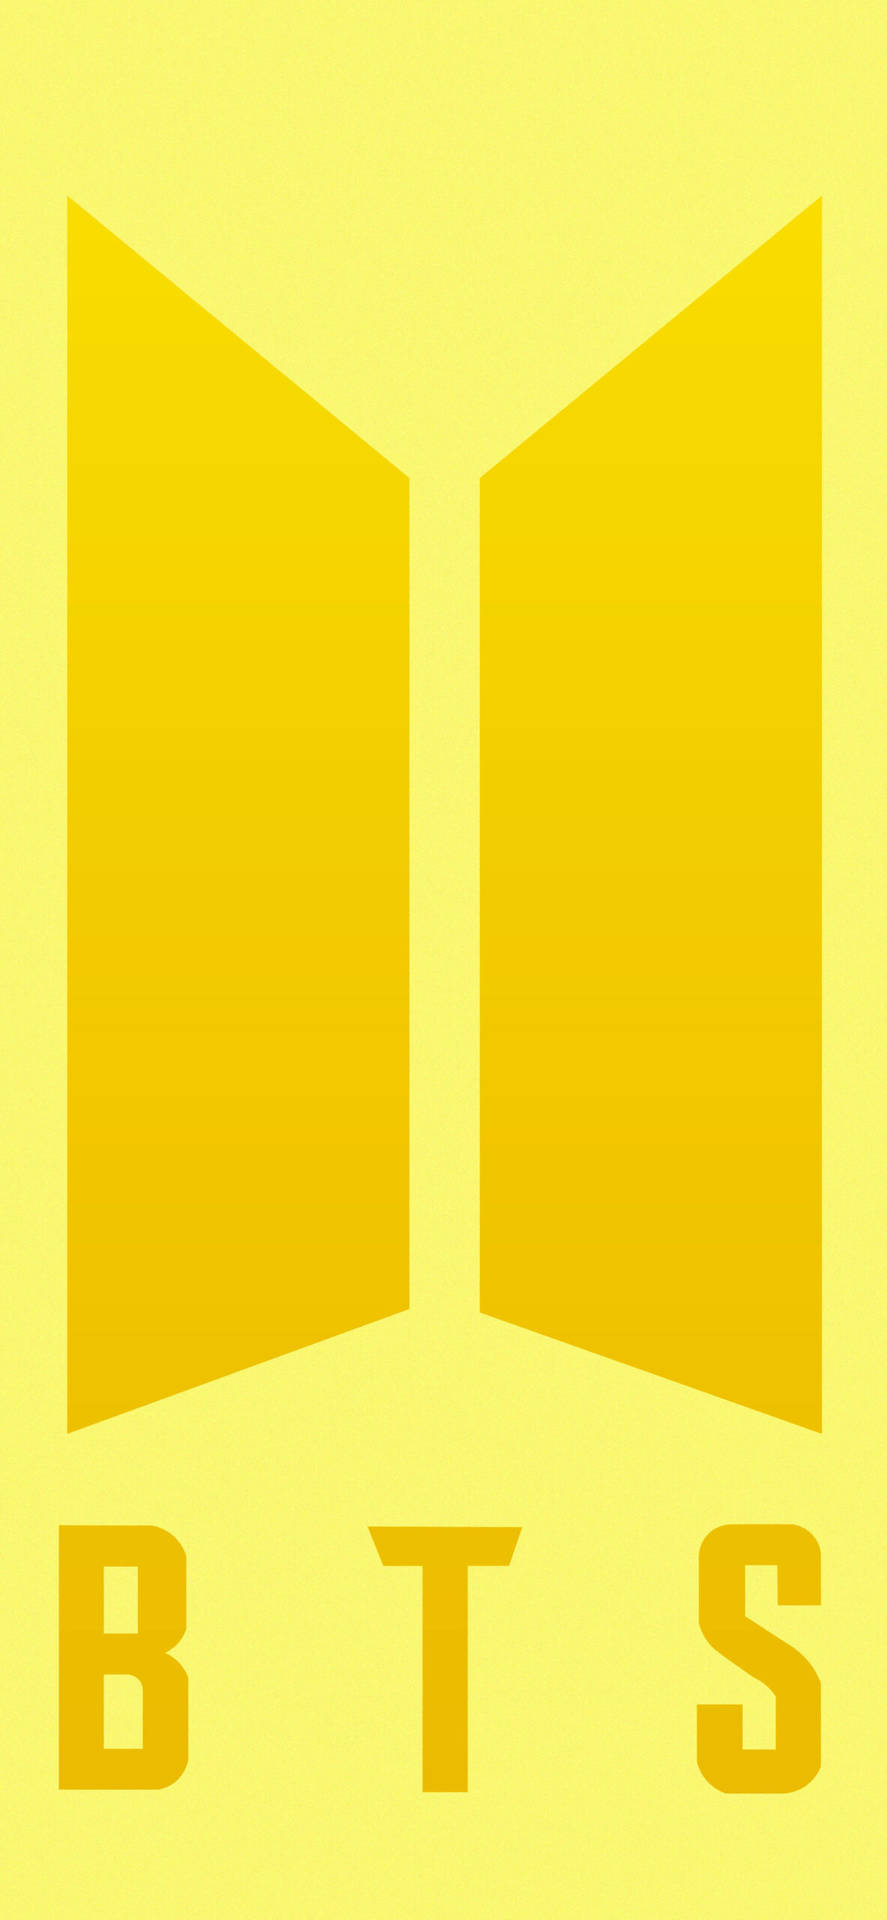 Bts Logo In Yellow Background